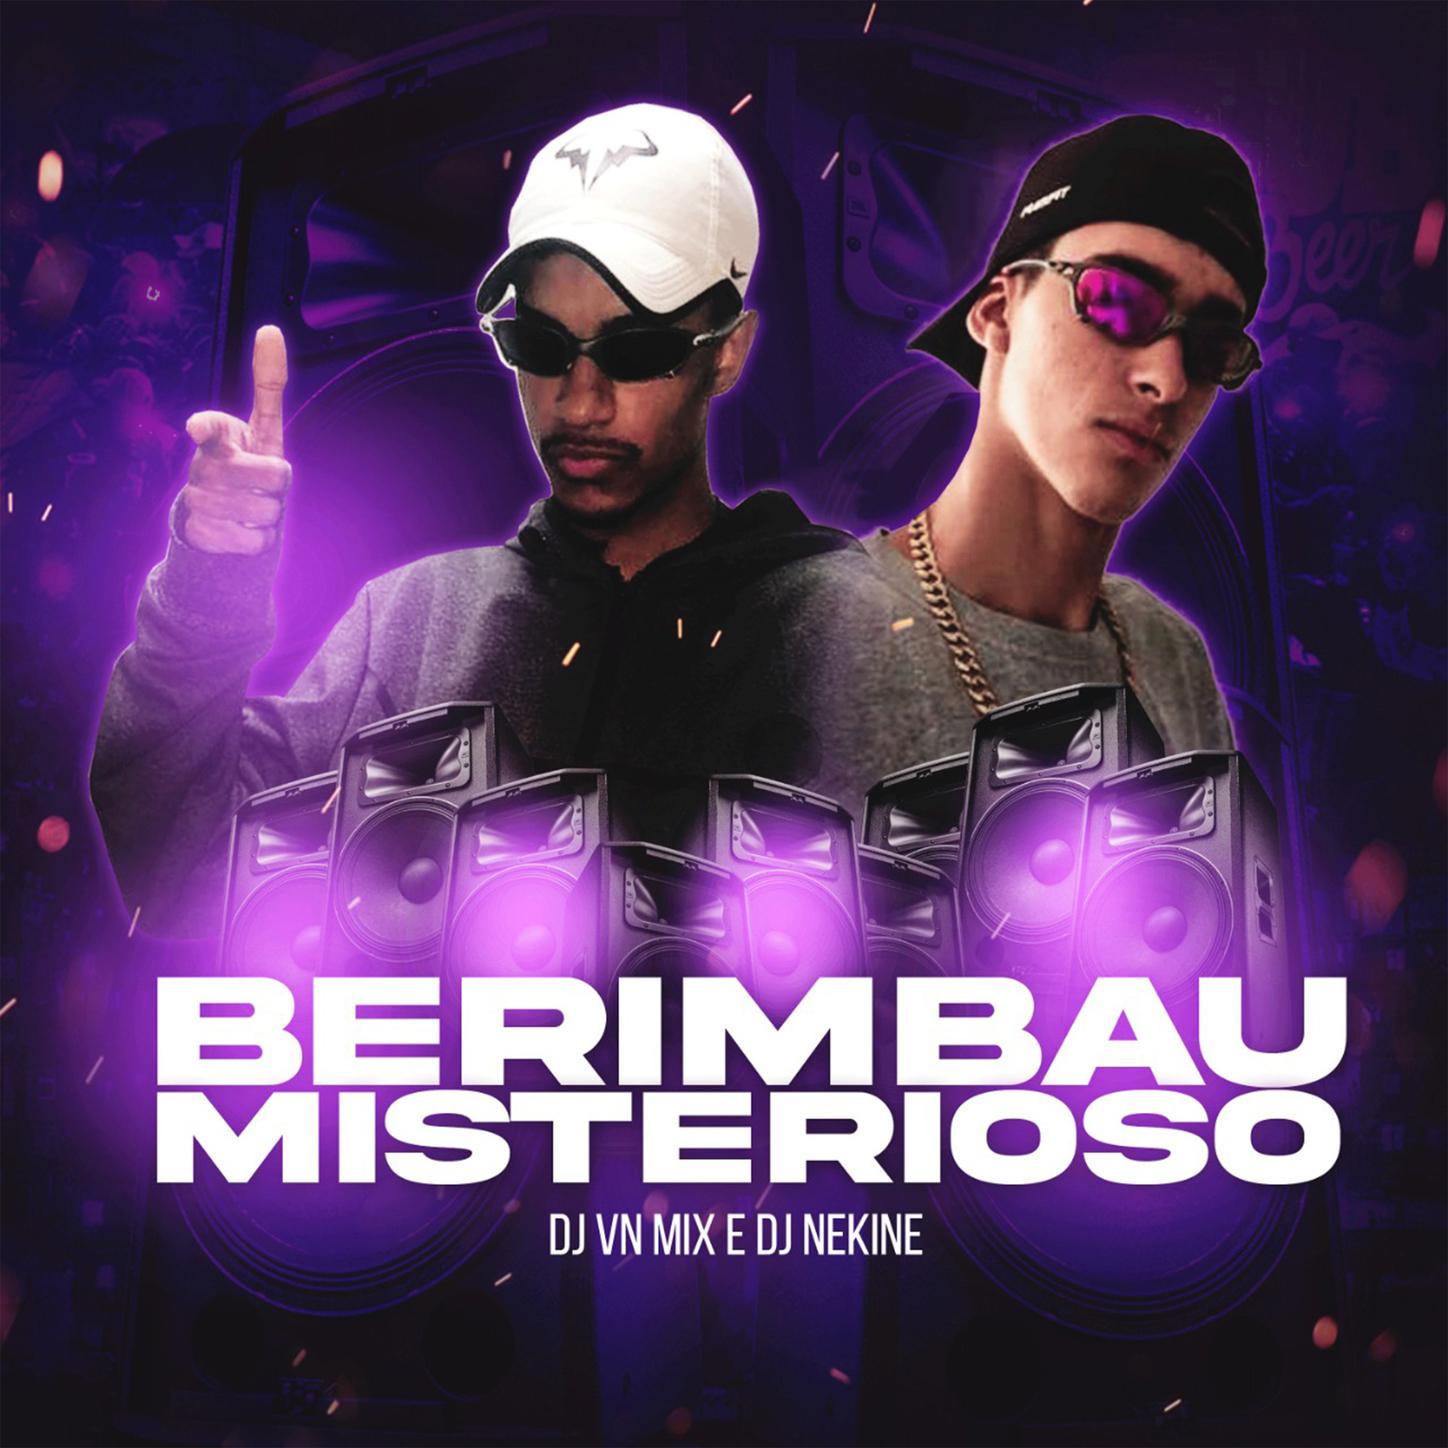 DJ VN Mix - BERIMBAU MISTERIOSO